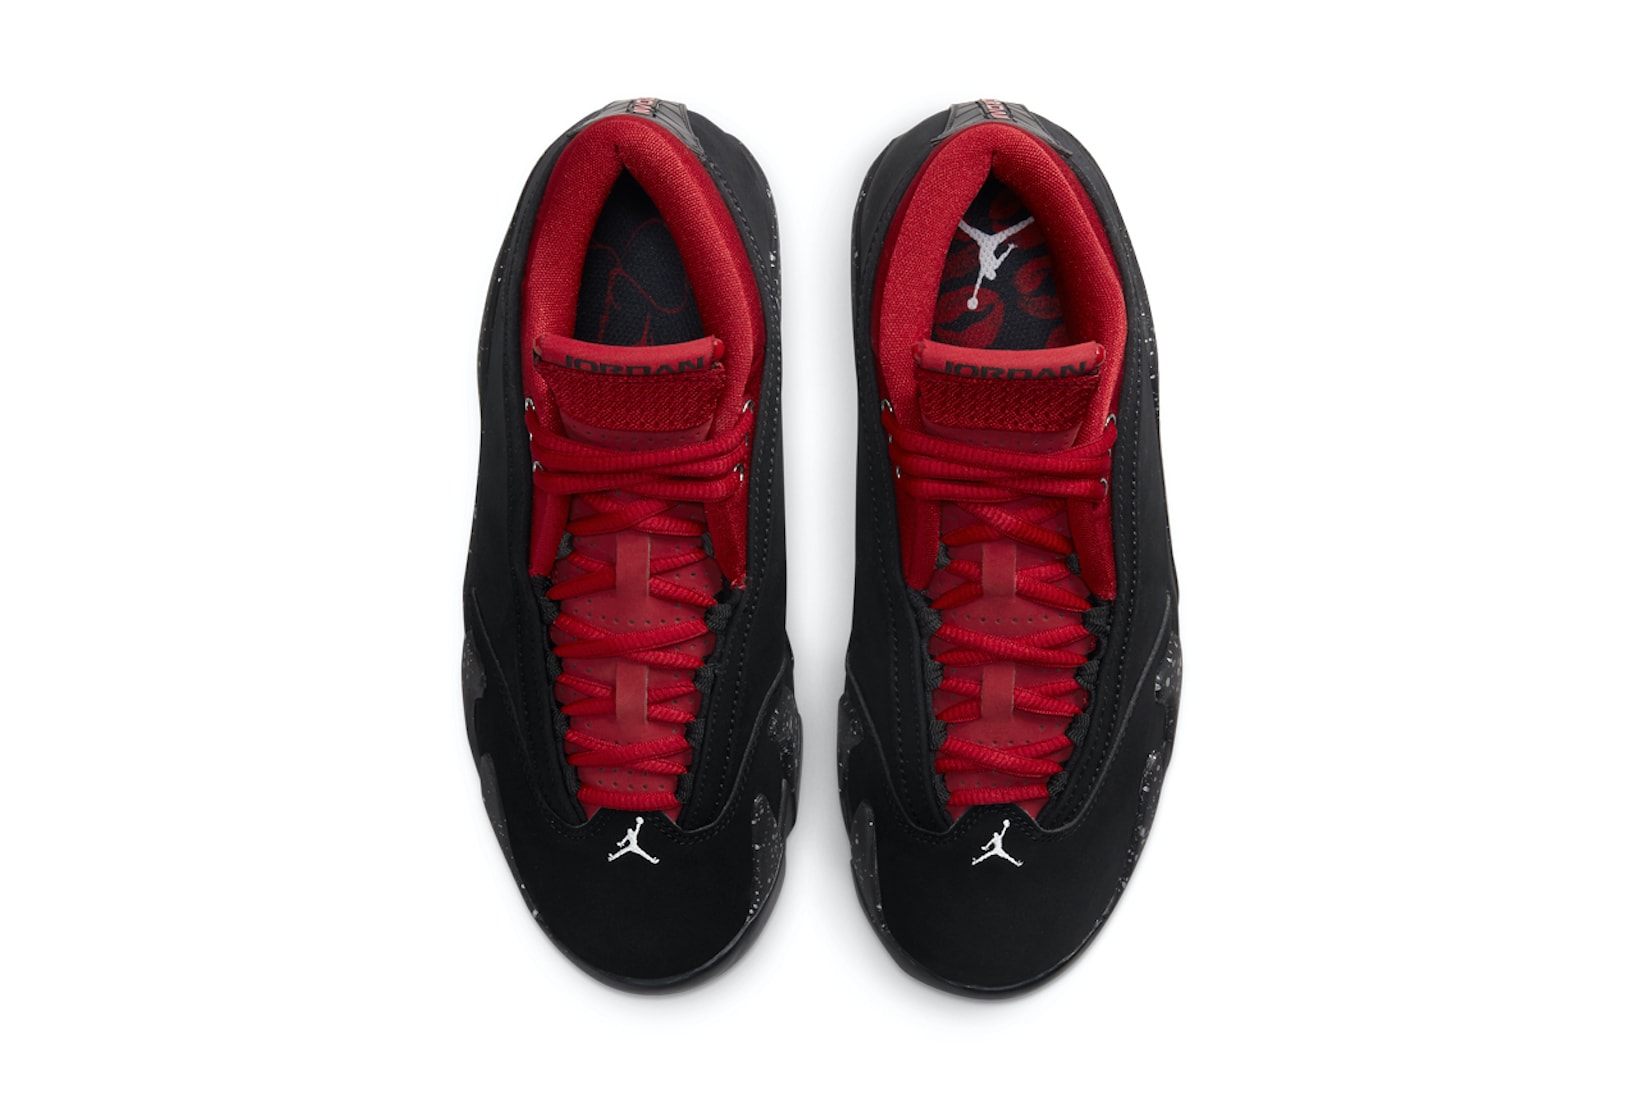 Nike Womens Air Jordan 14 AJ14 Low Red Lipstick Black Sneakers Footwear Kicks Sneakerhead Shoes Aerial Top View Insoles